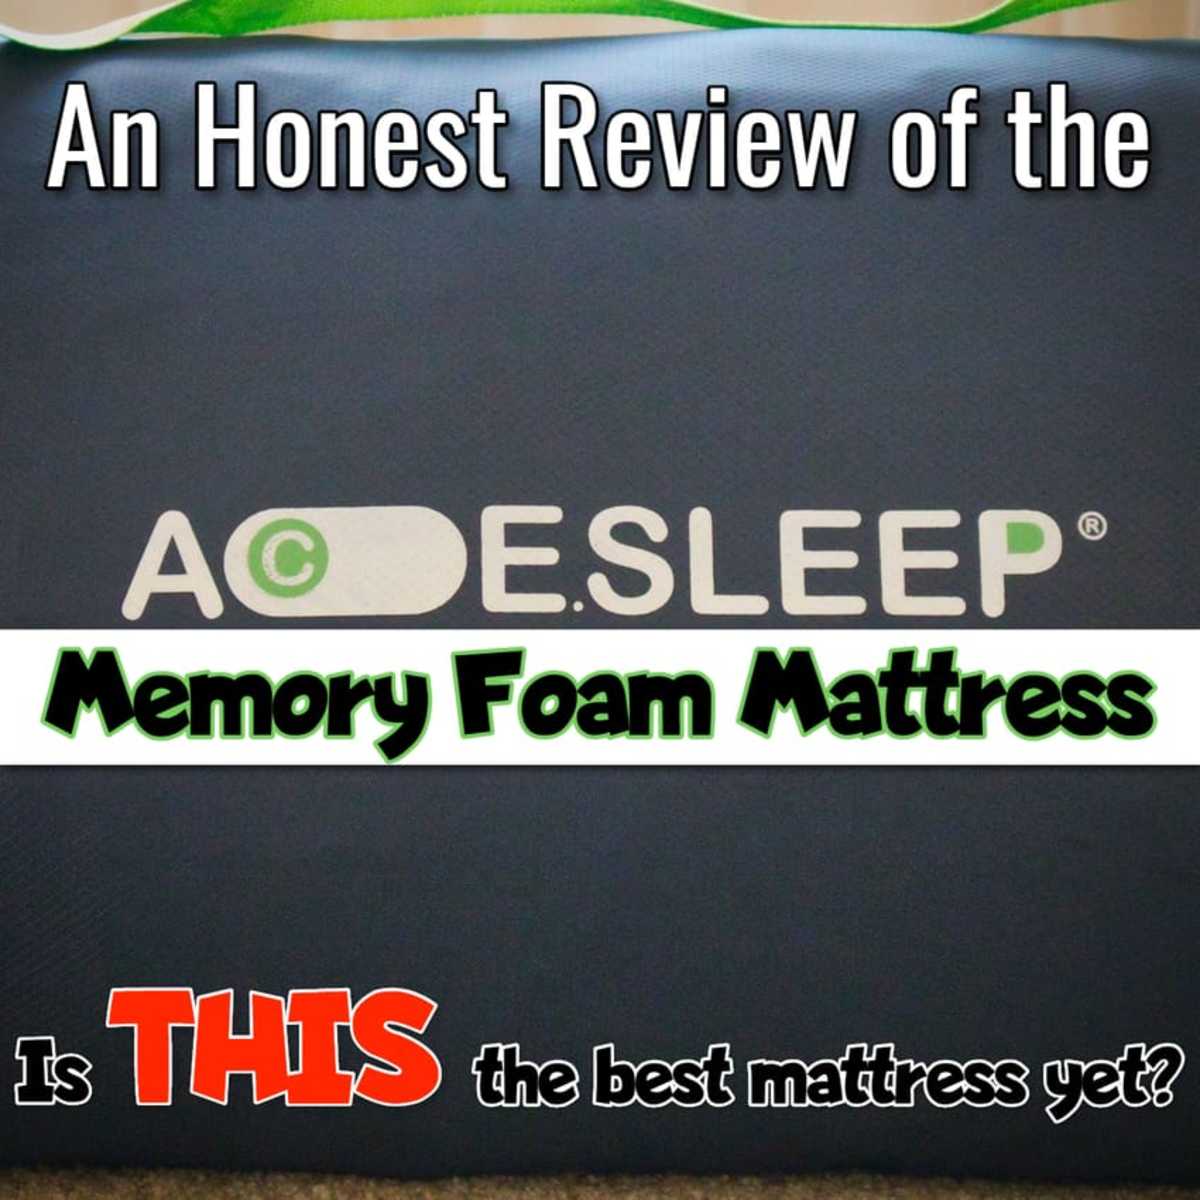 Acesleep Mattress: The Best Memory Foam for Side Sleepers?